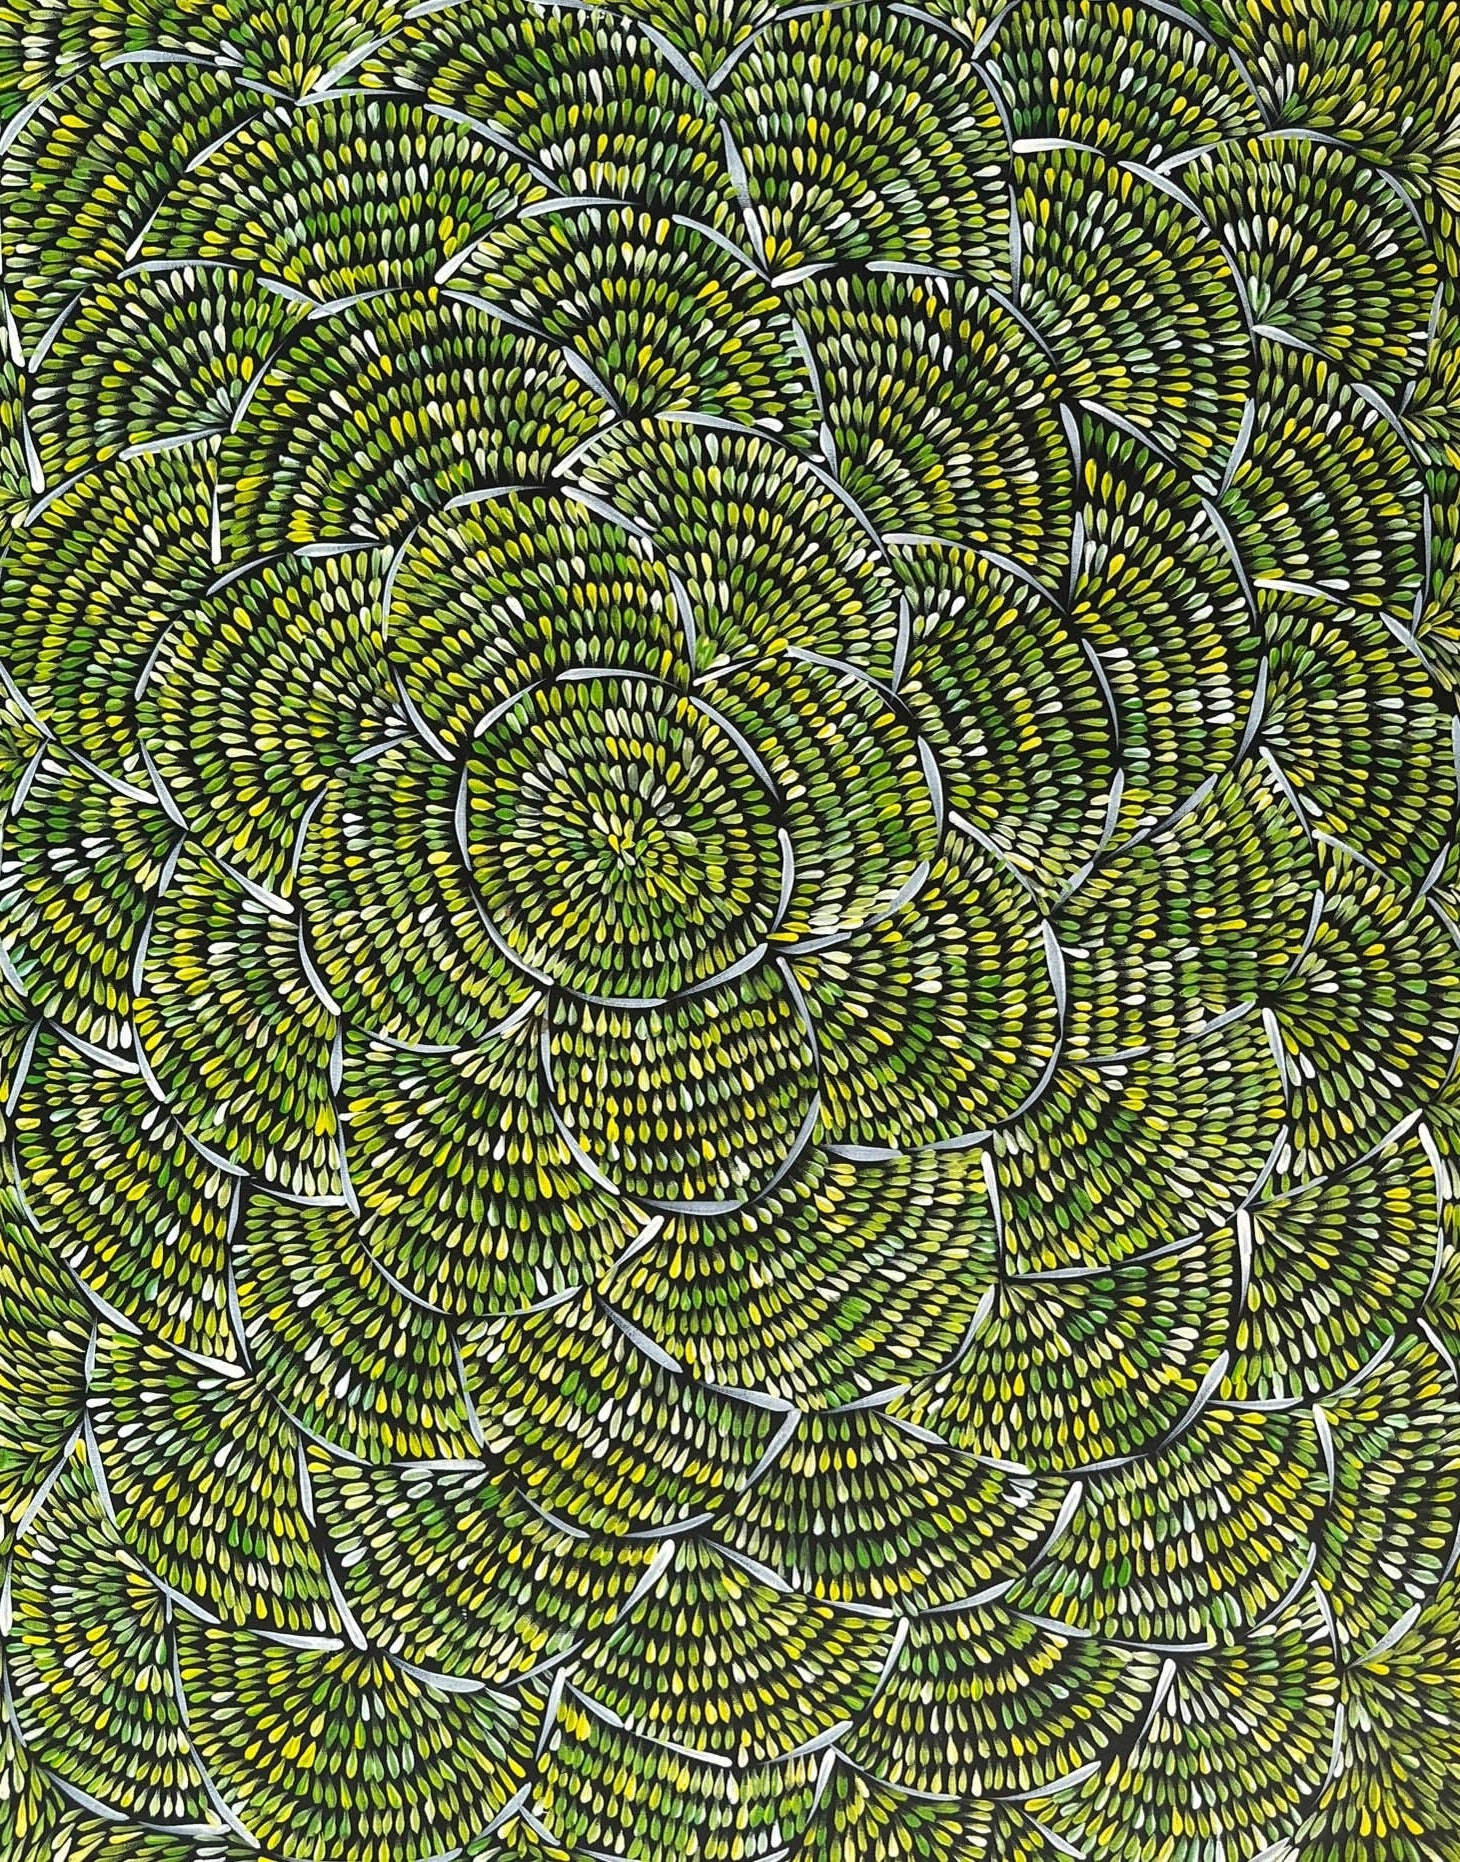 Margaret Turner Petyarre + Northern Territory + Indigenous Art + Aboriginal Art + Australian Art + Bush Medicine Leaves + Artwork + Painting + Darwin Based Gallery + Contemporary Art + Yellow + Green + 